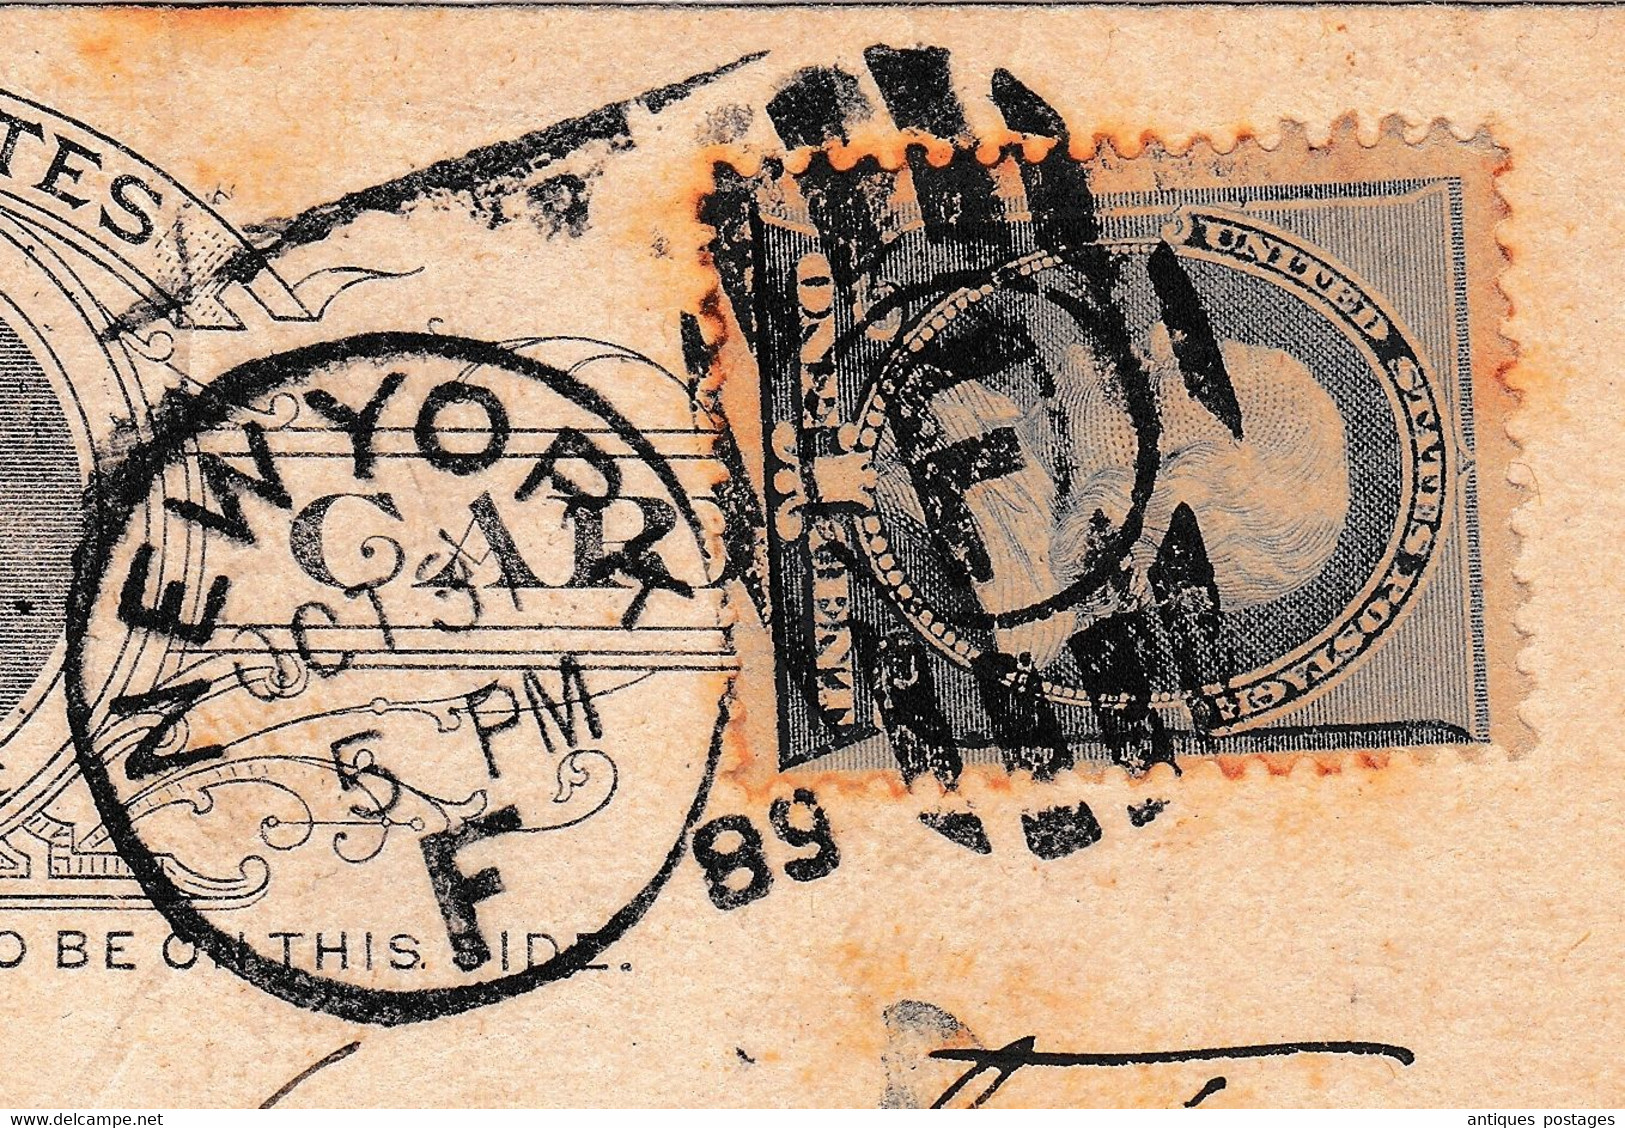 Postal Stationery 1889 One Cent Thomas Jefferson New York USA Bruxelles Belgique Henri Lamerlin Librairie